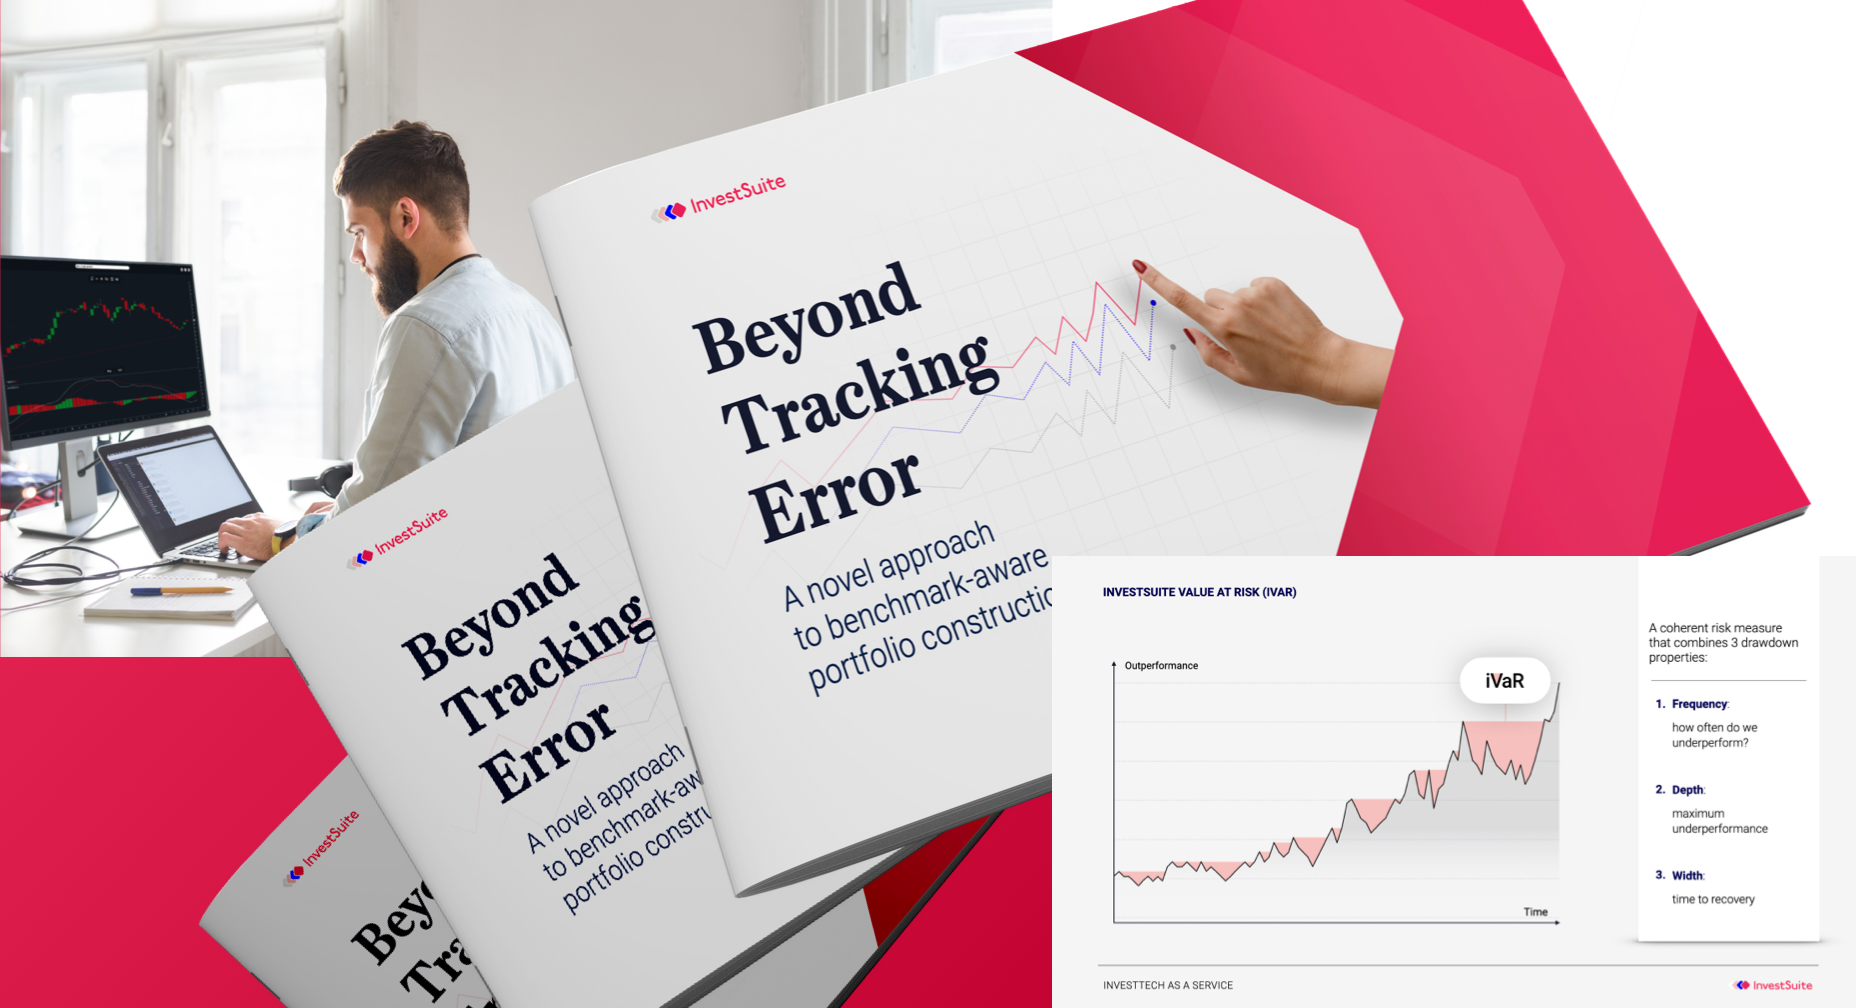 Webinar 'Beyond Tracking Error'